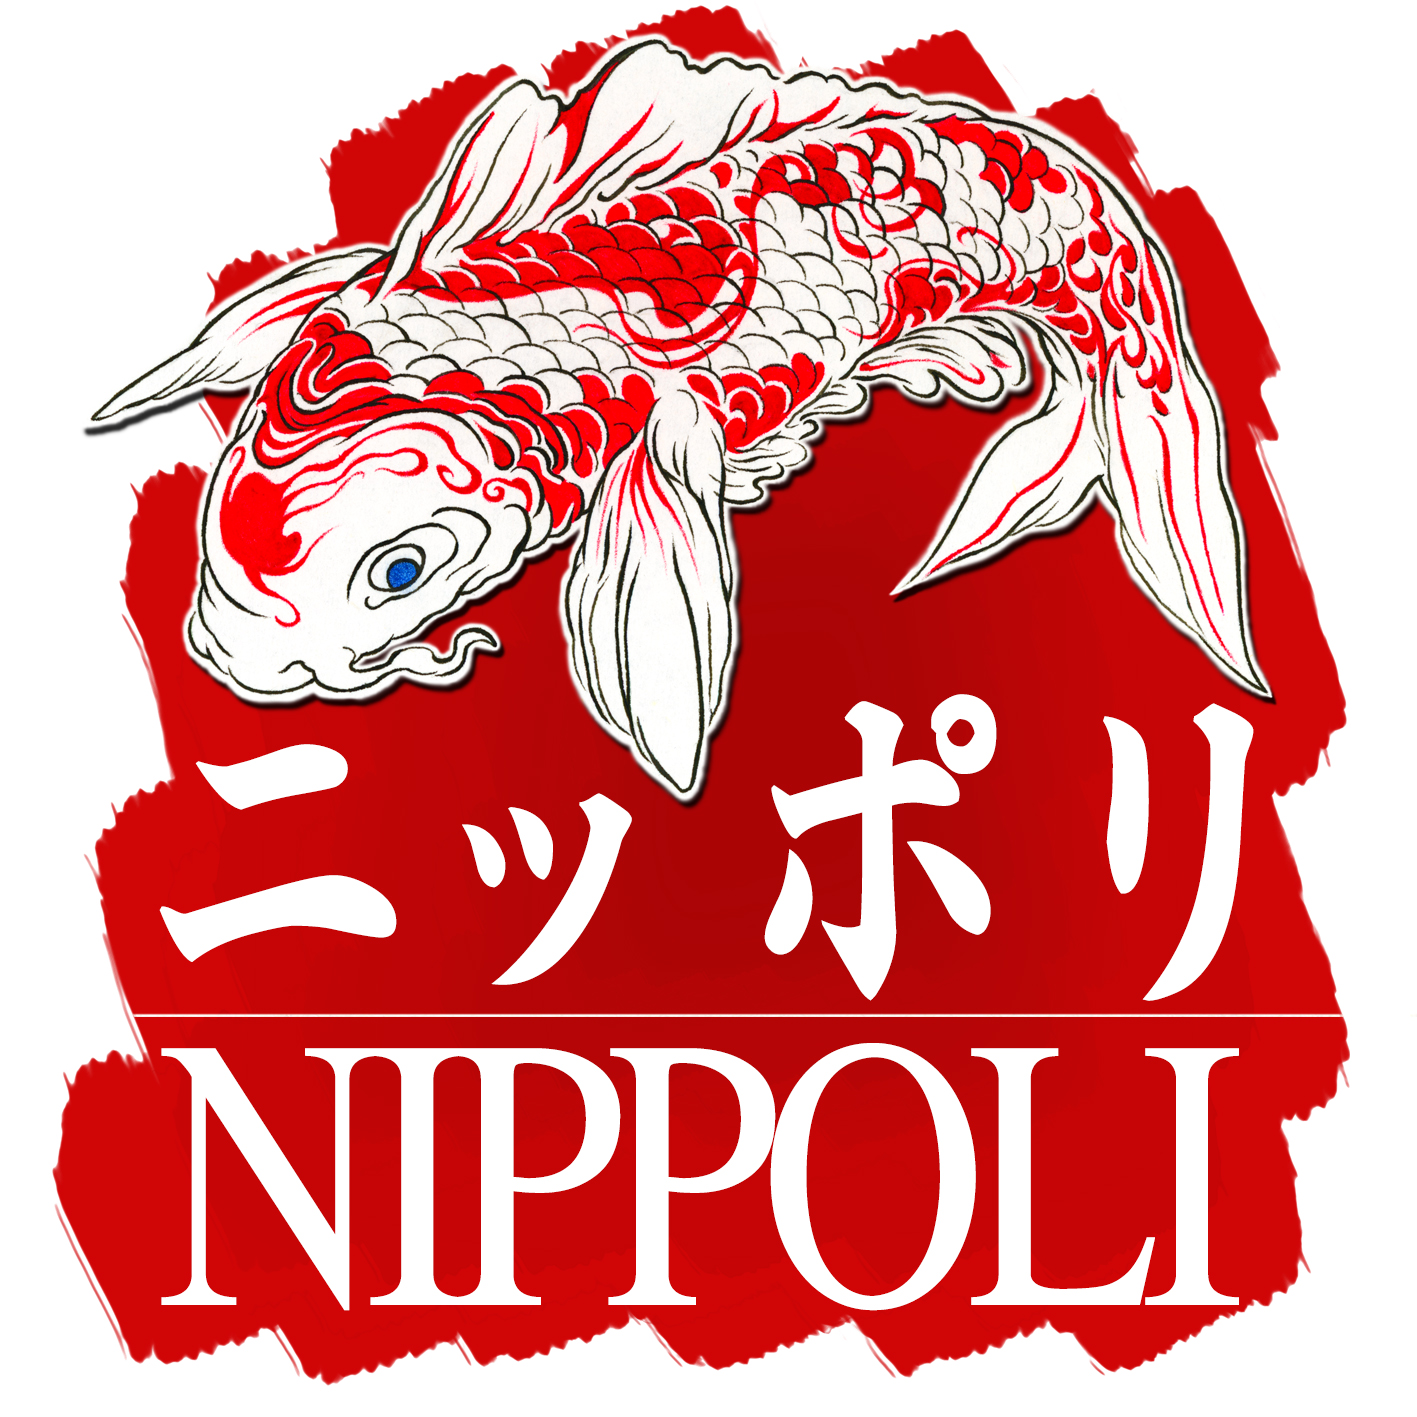 Nippoli